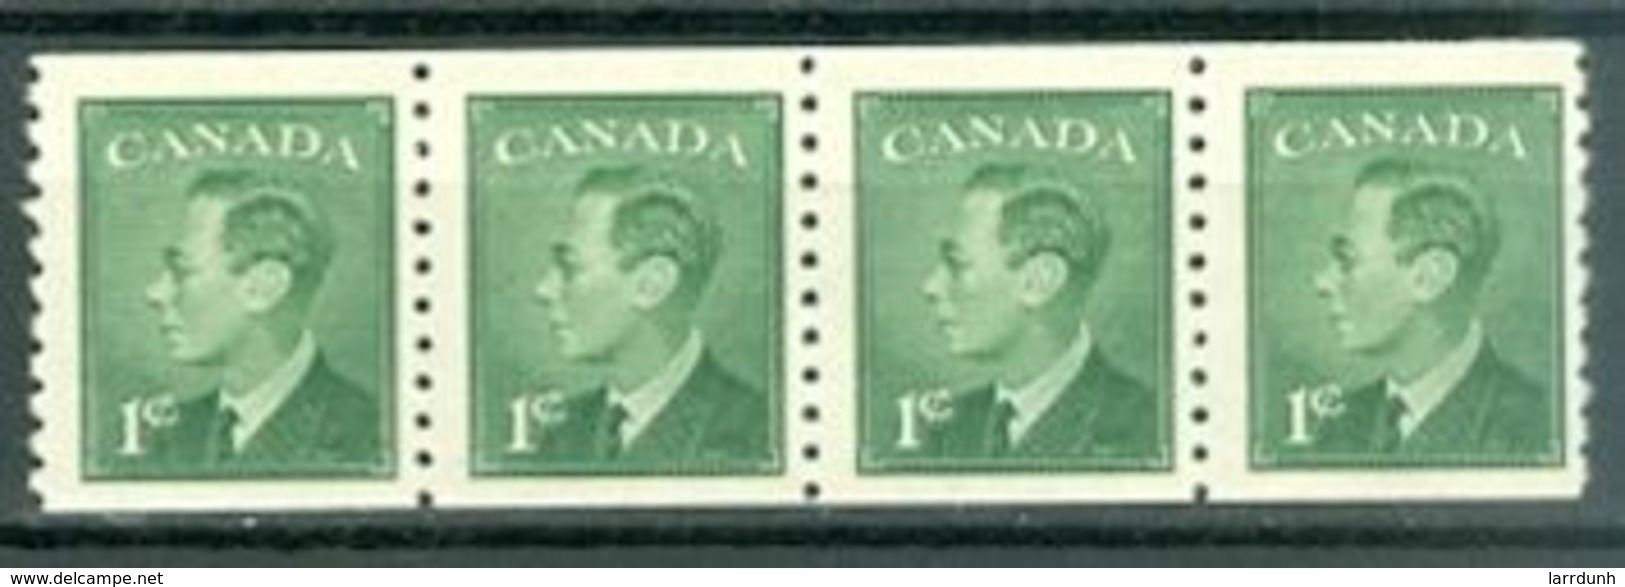 Canada 295 KGVI 1c Green Coil Strip 4 F-VF MNH 1950 A04s - Ungebraucht